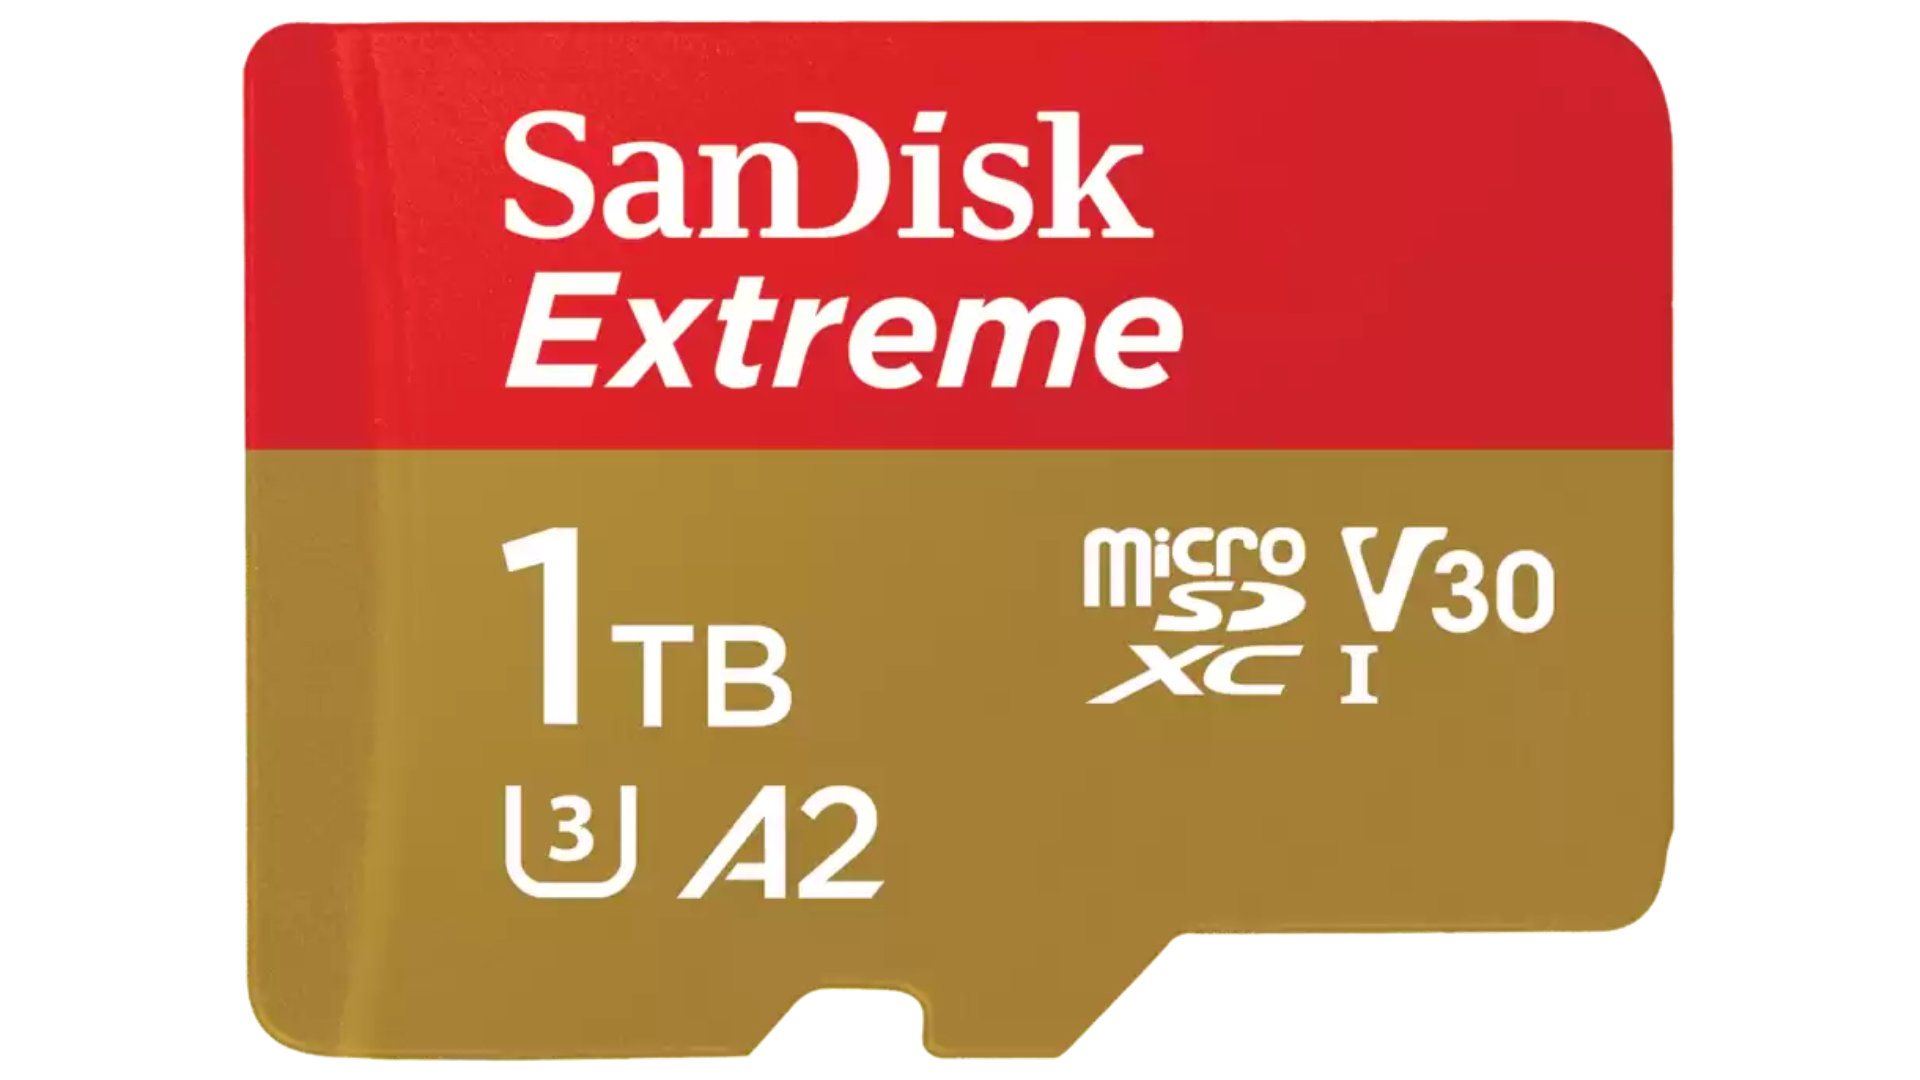 La mejor carta SD para la cubierta de vapor: la tarjeta de microSD Extreme Sandisk sobre un fondo blanco